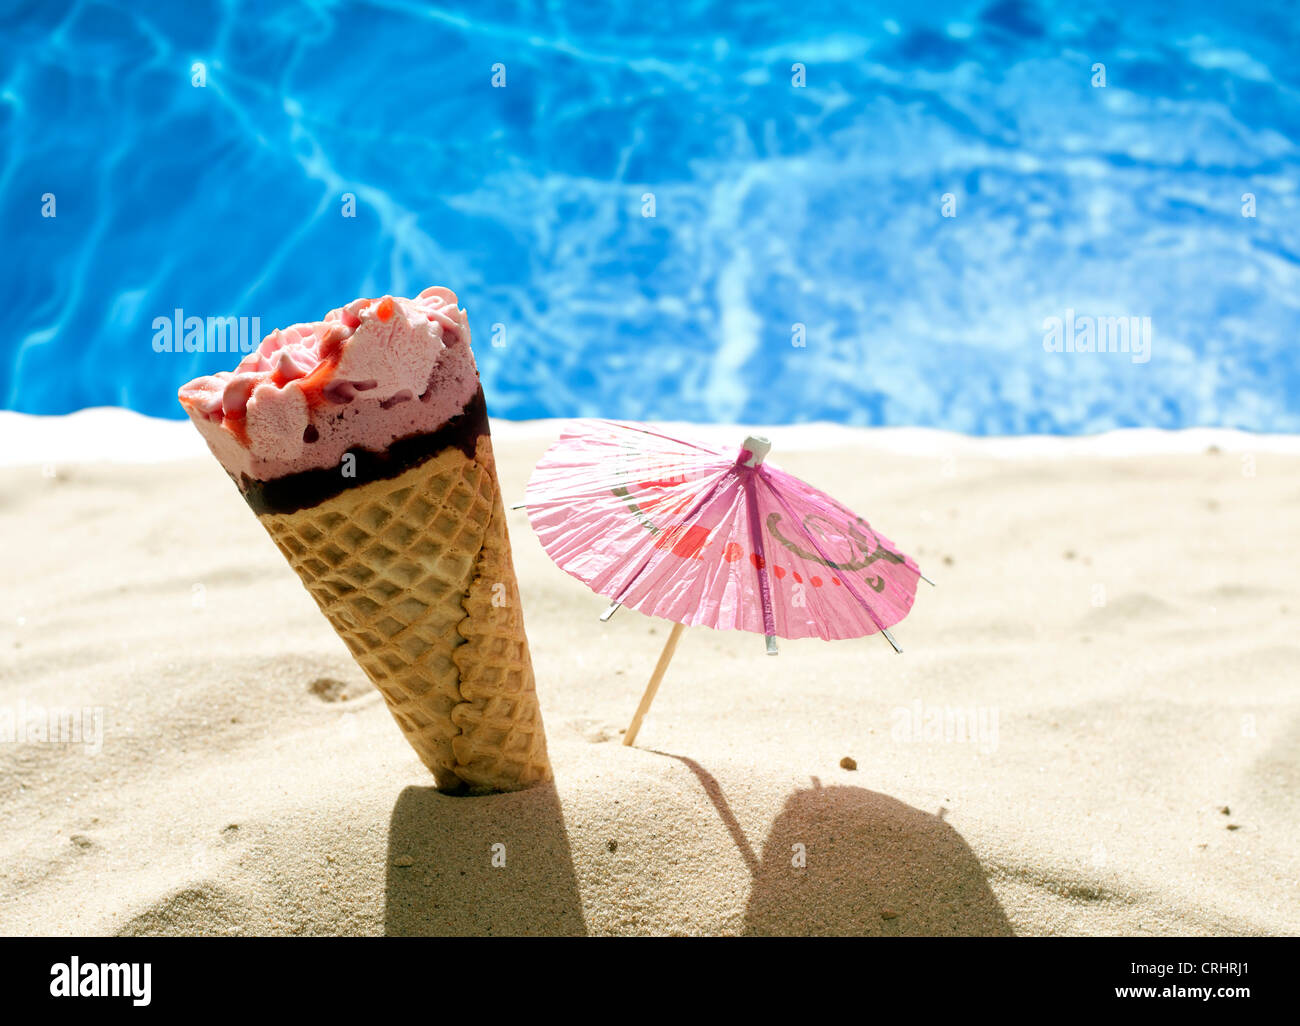 Eis am Strand Urlaub Urlaub heißen Tagen Konzept Stockfoto